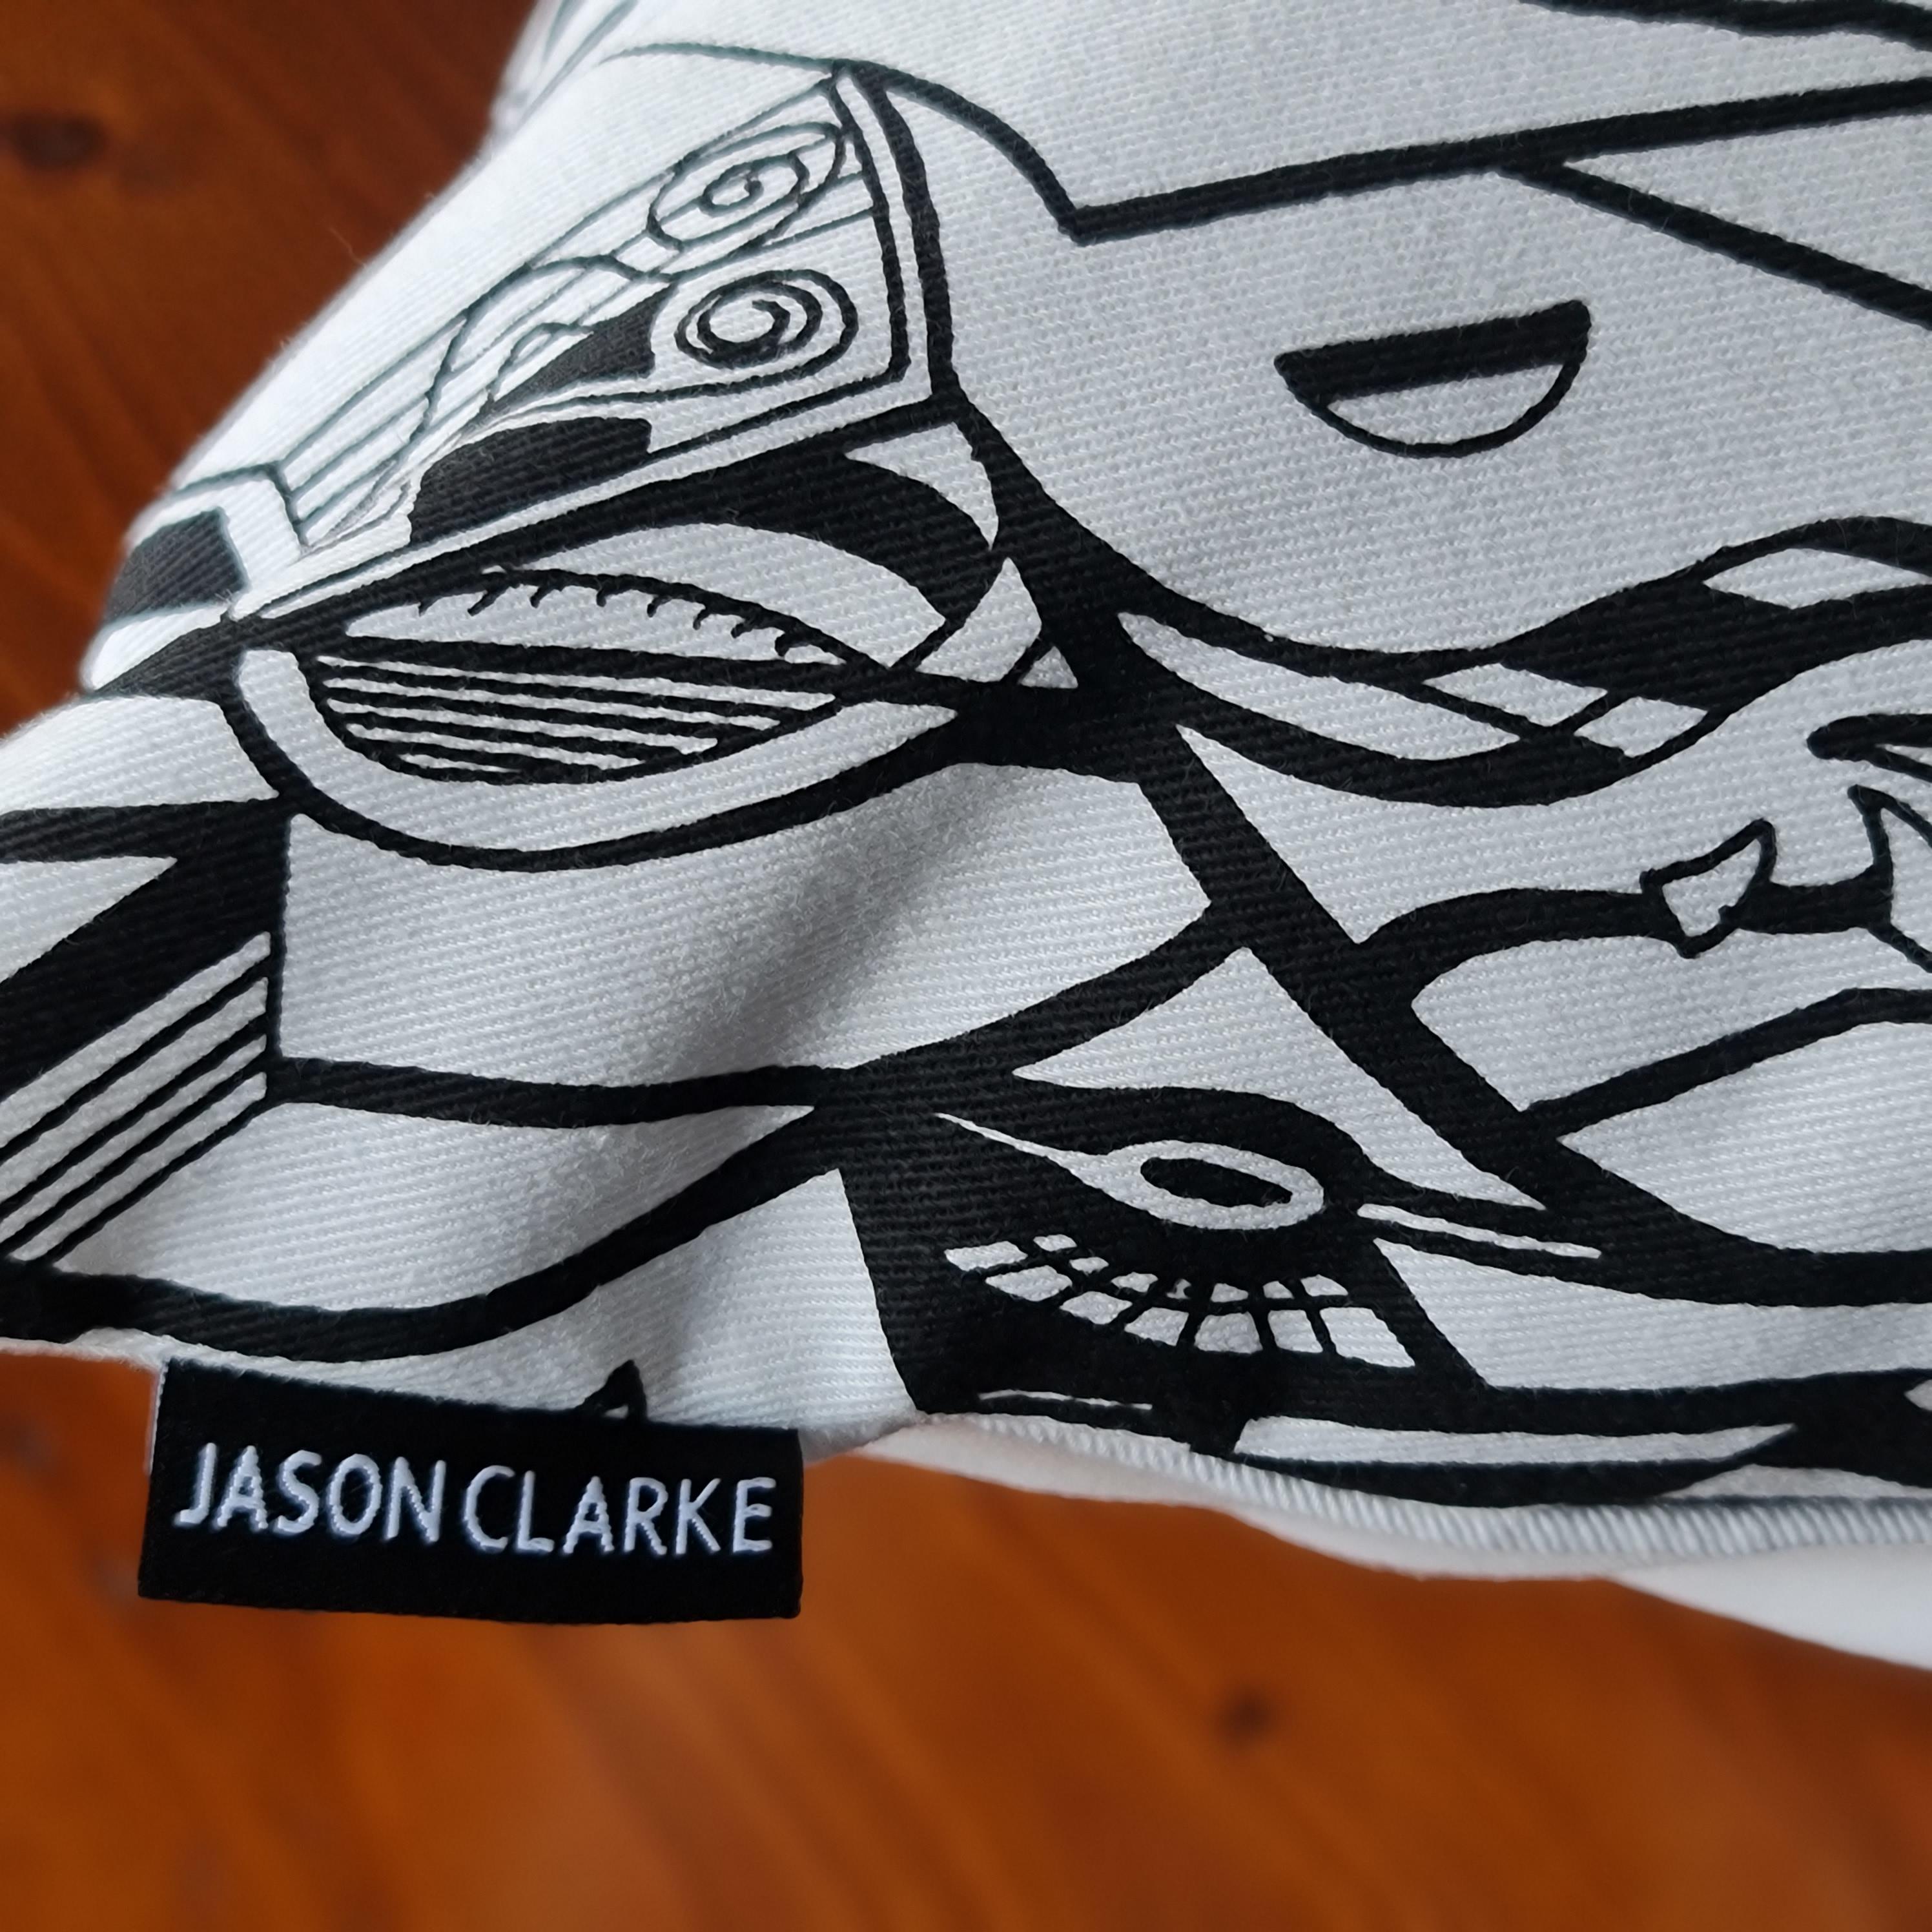 Cushion product tag for Jason Clarke